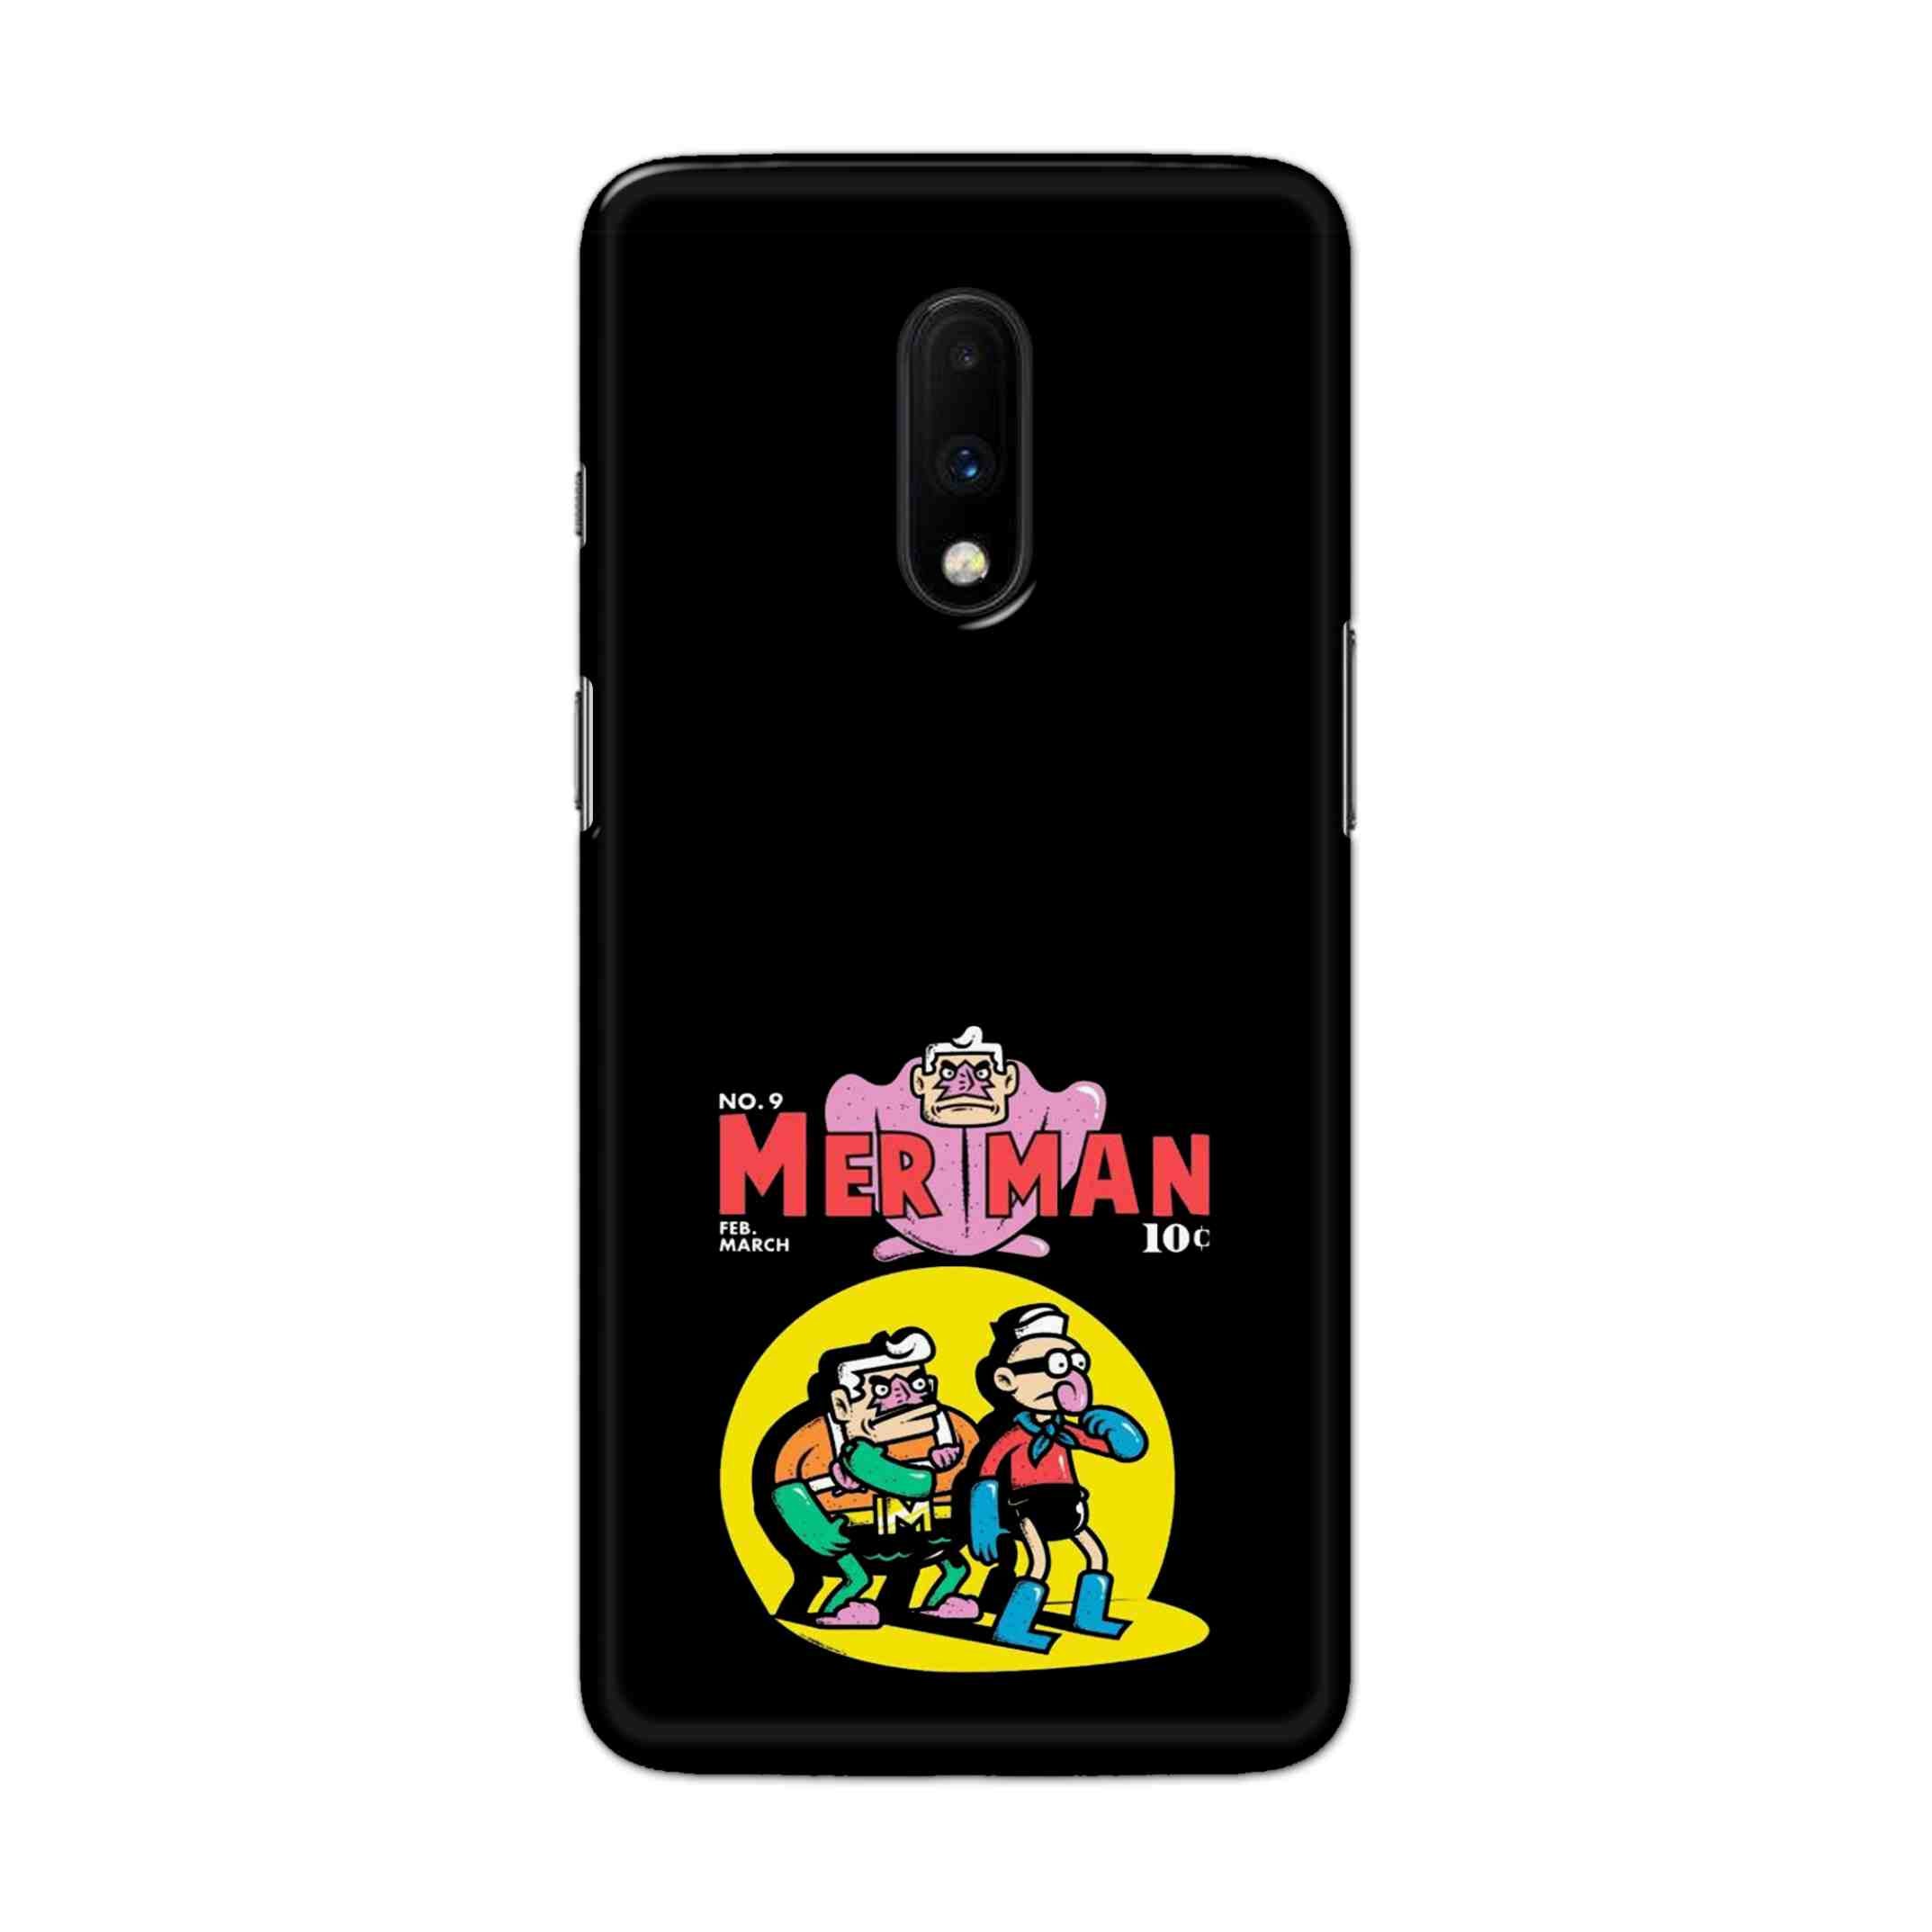 Buy Merman Hard Back Mobile Phone Case Cover For OnePlus 7 Online